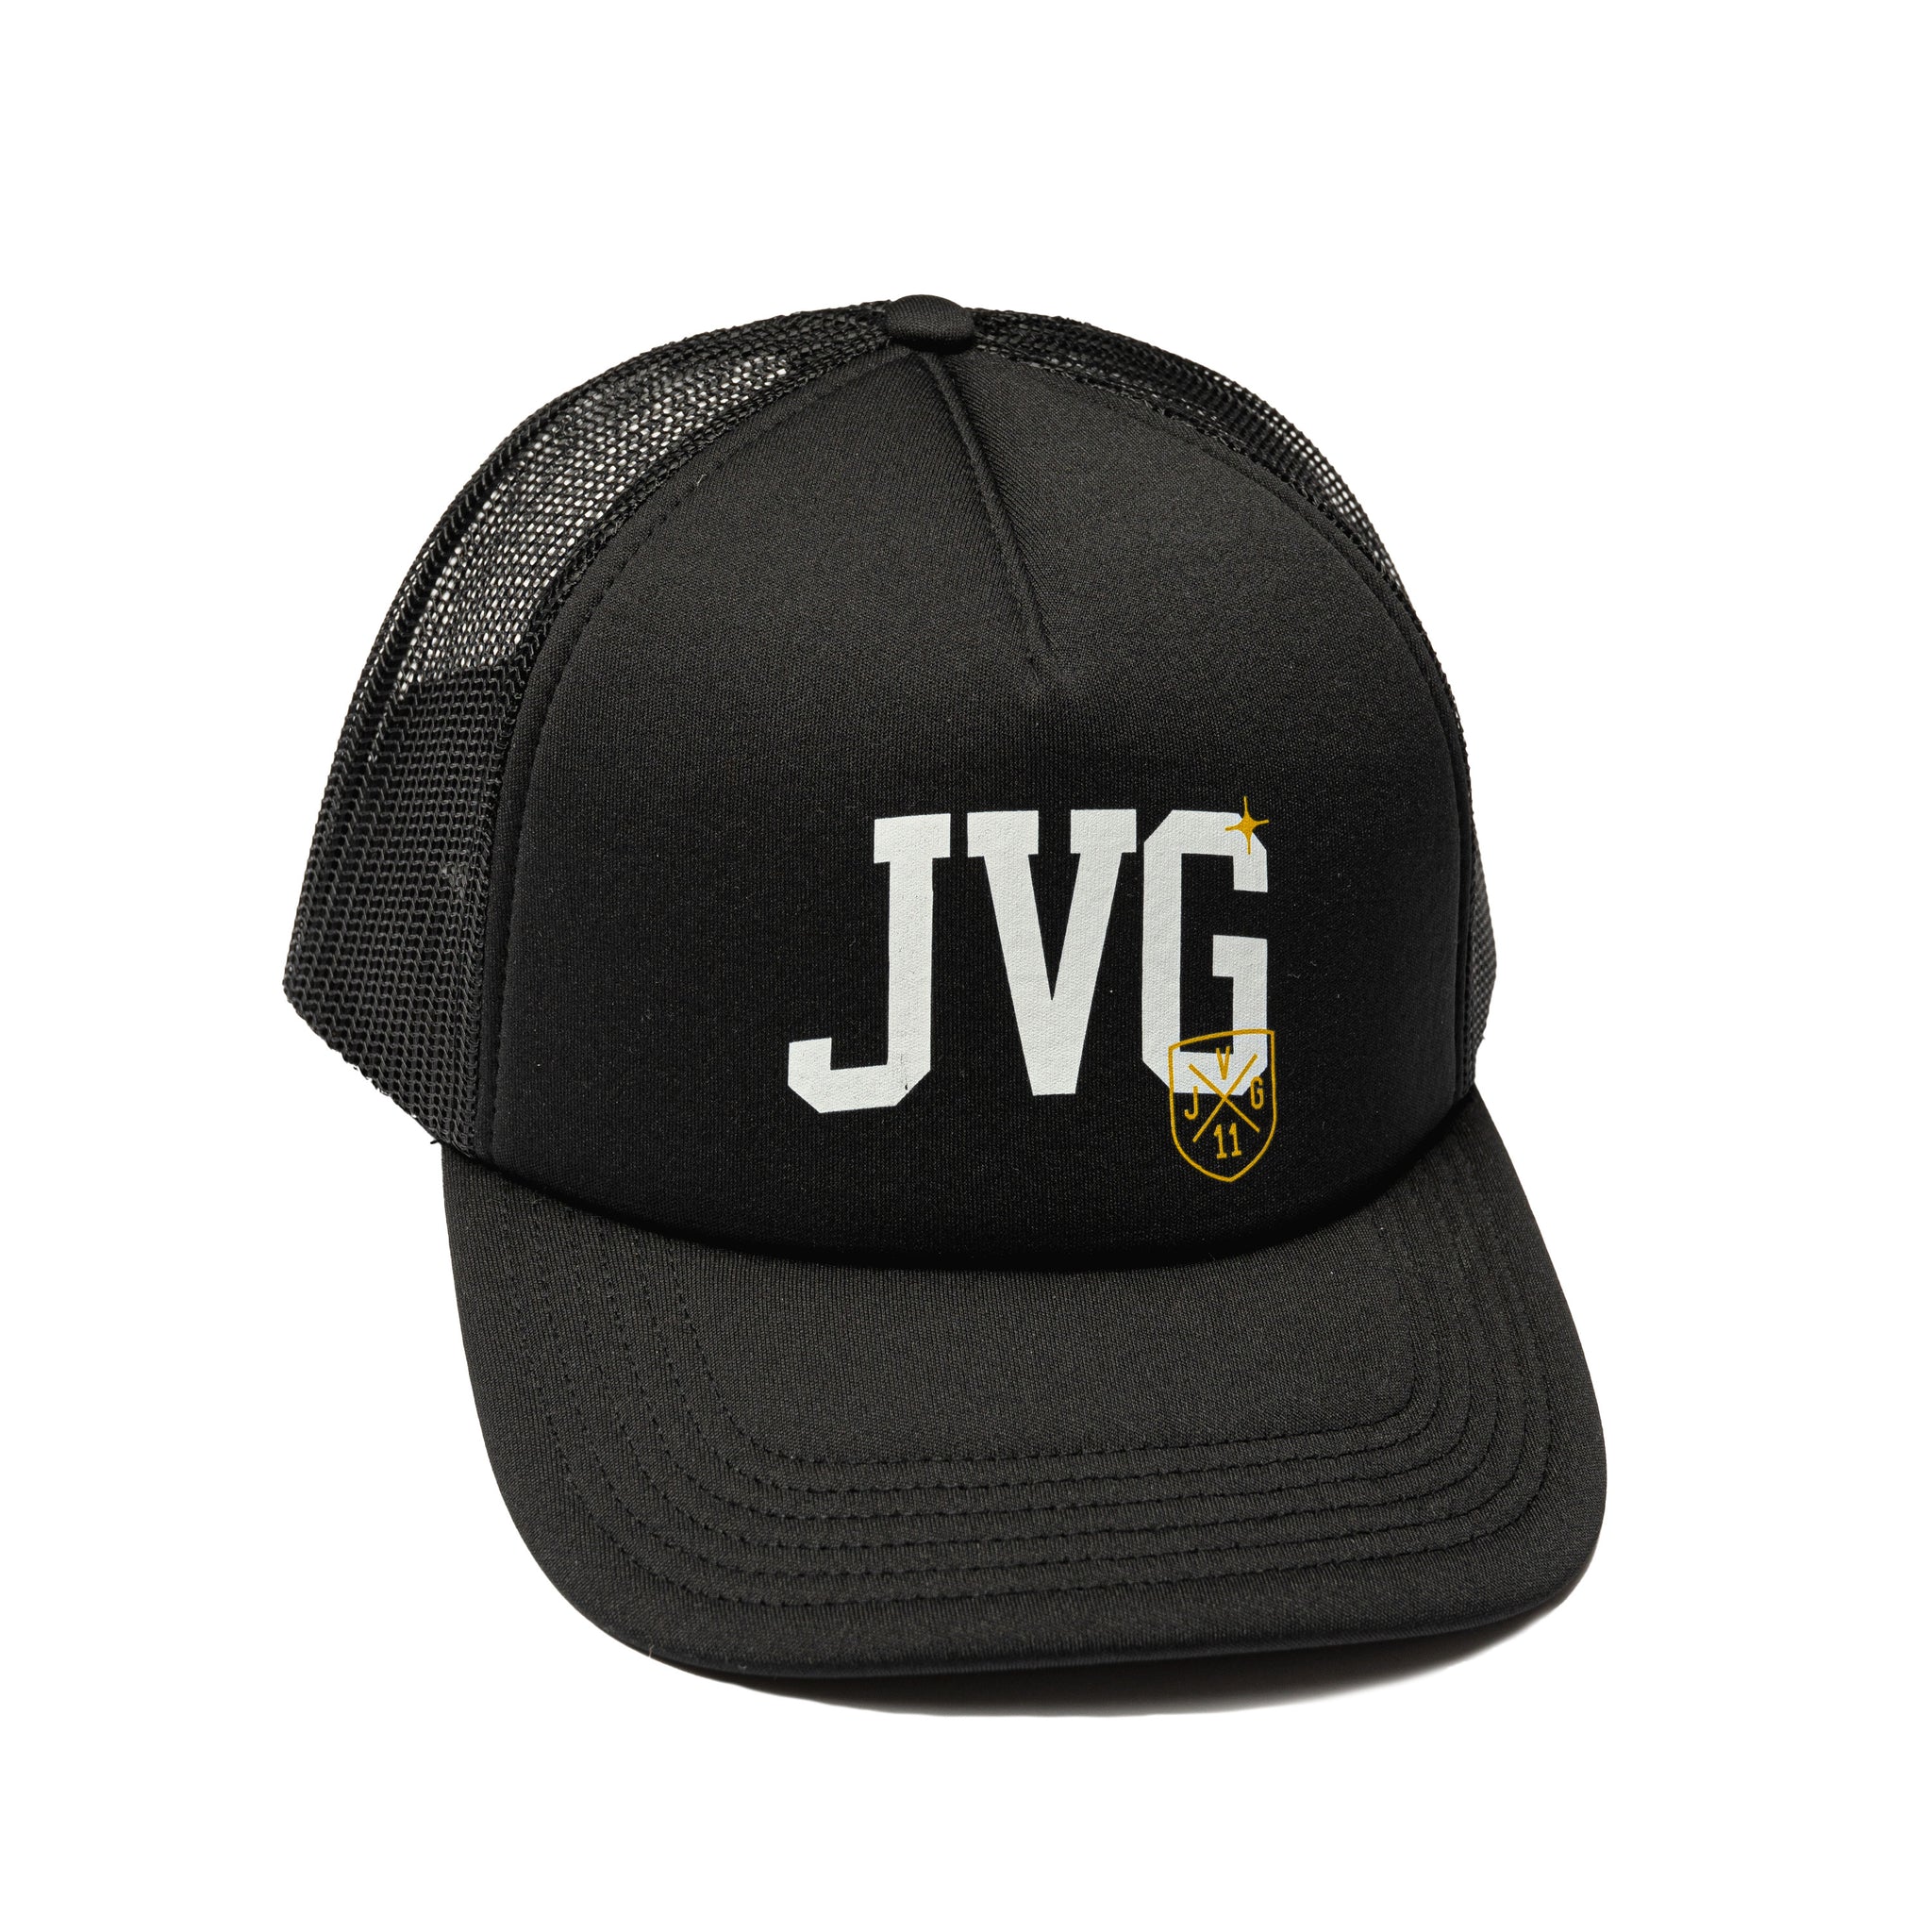 JVG Varsity Cap